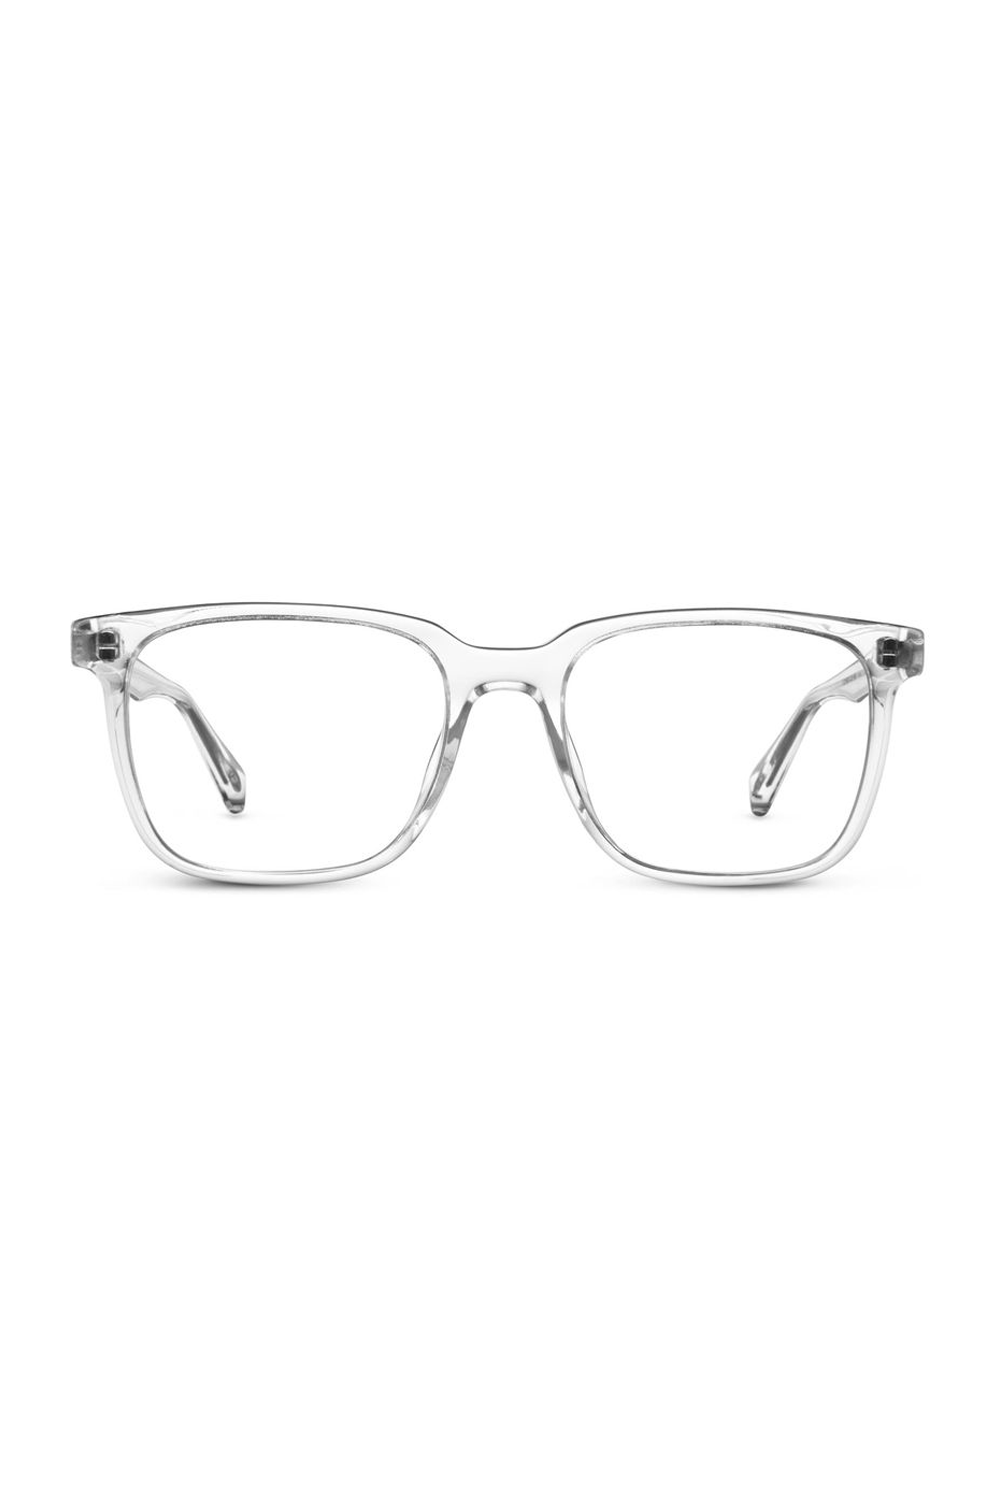 clear frame glasses designer